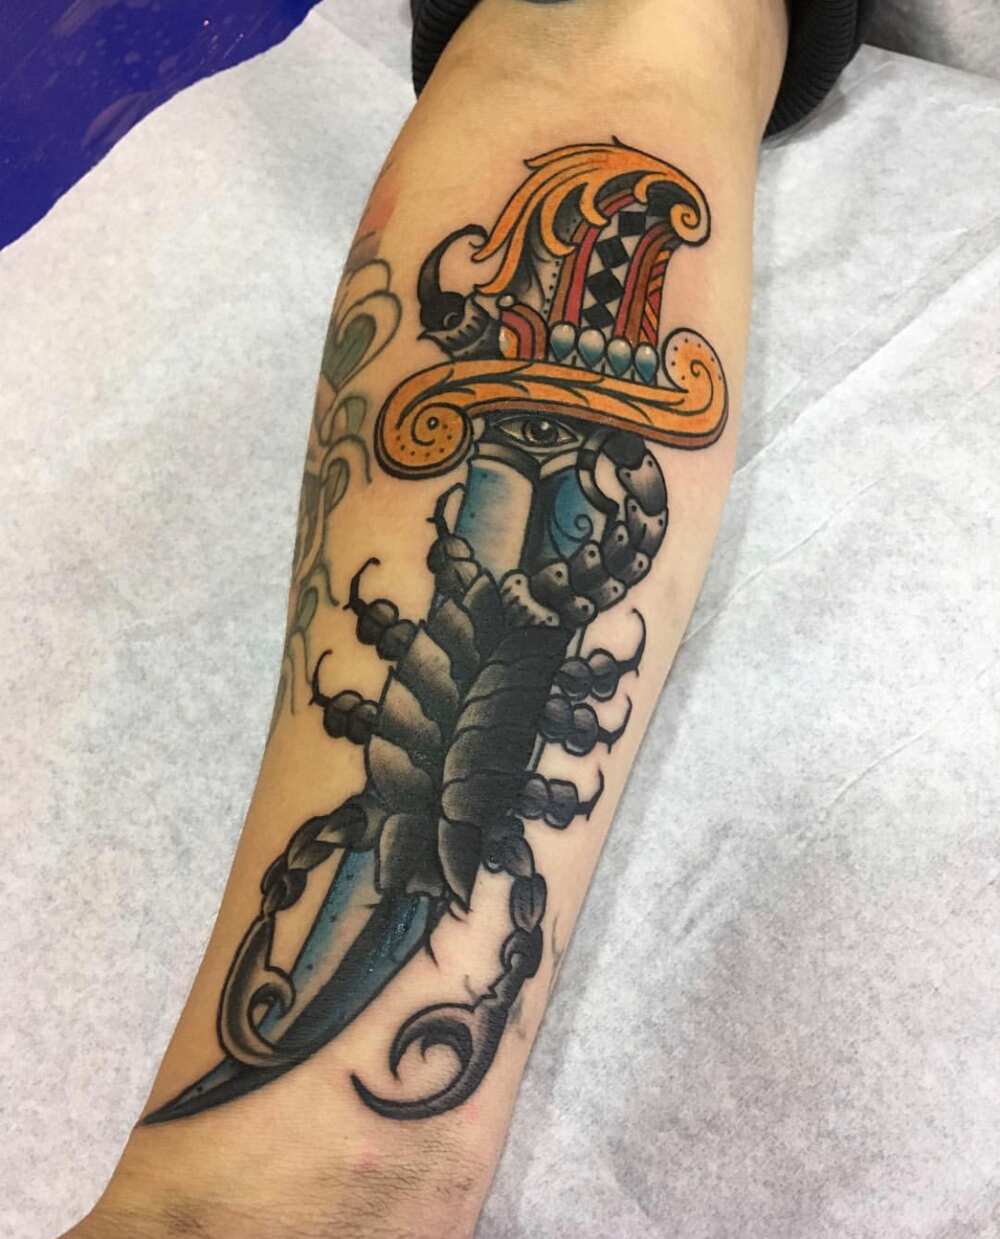 Scorpion symbolism